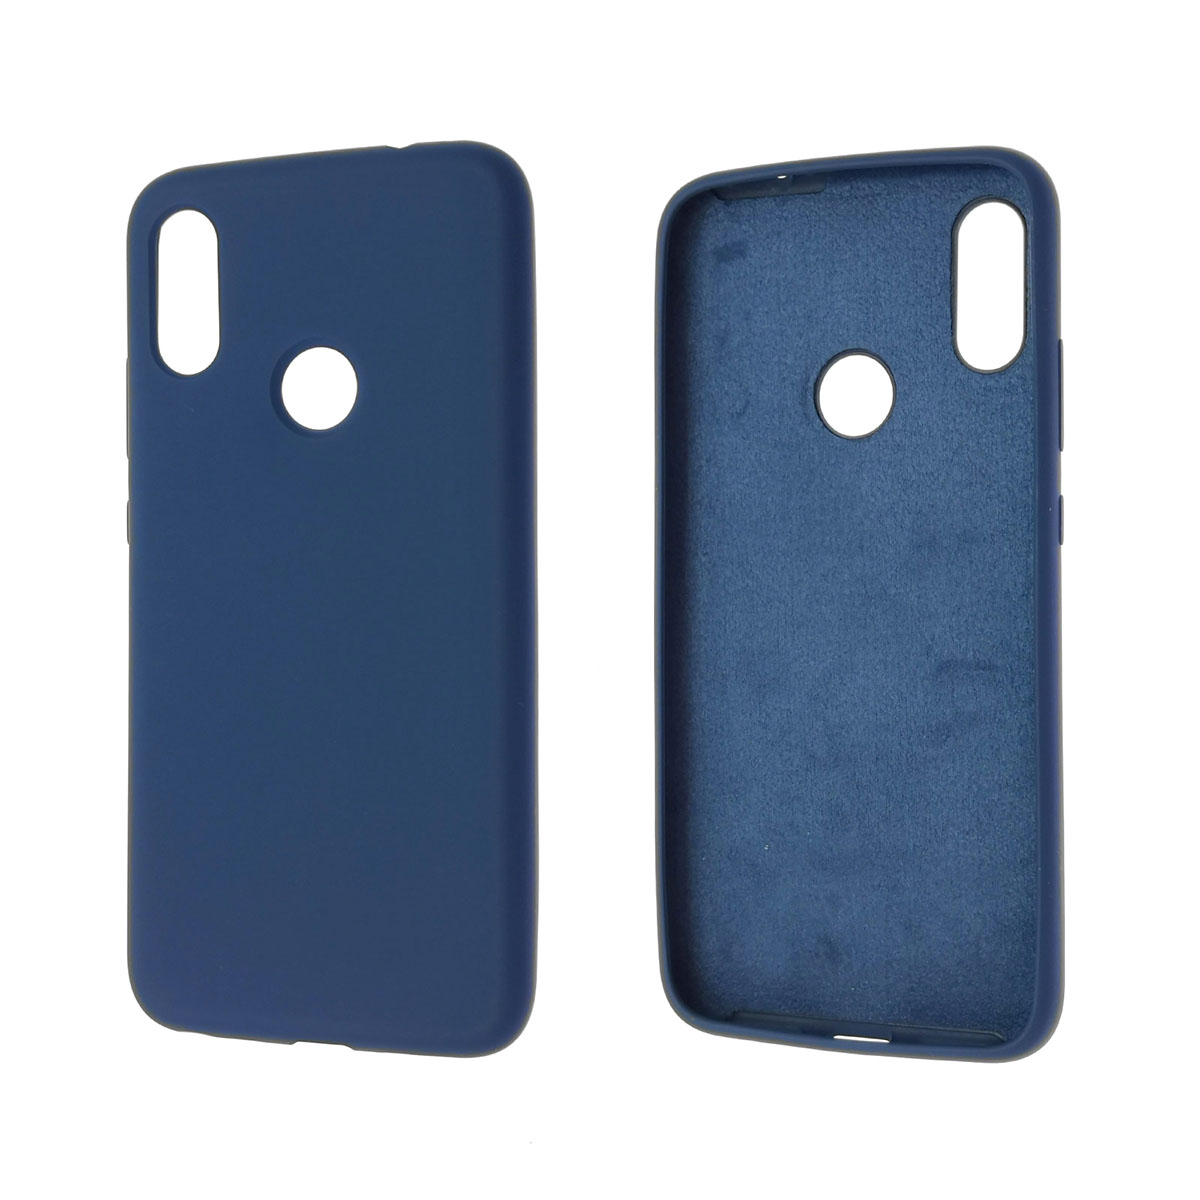 Чехол накладка Silicon Cover для XIAOMI Redmi Note 7, силикон, бархат, цвет синий кобальт.